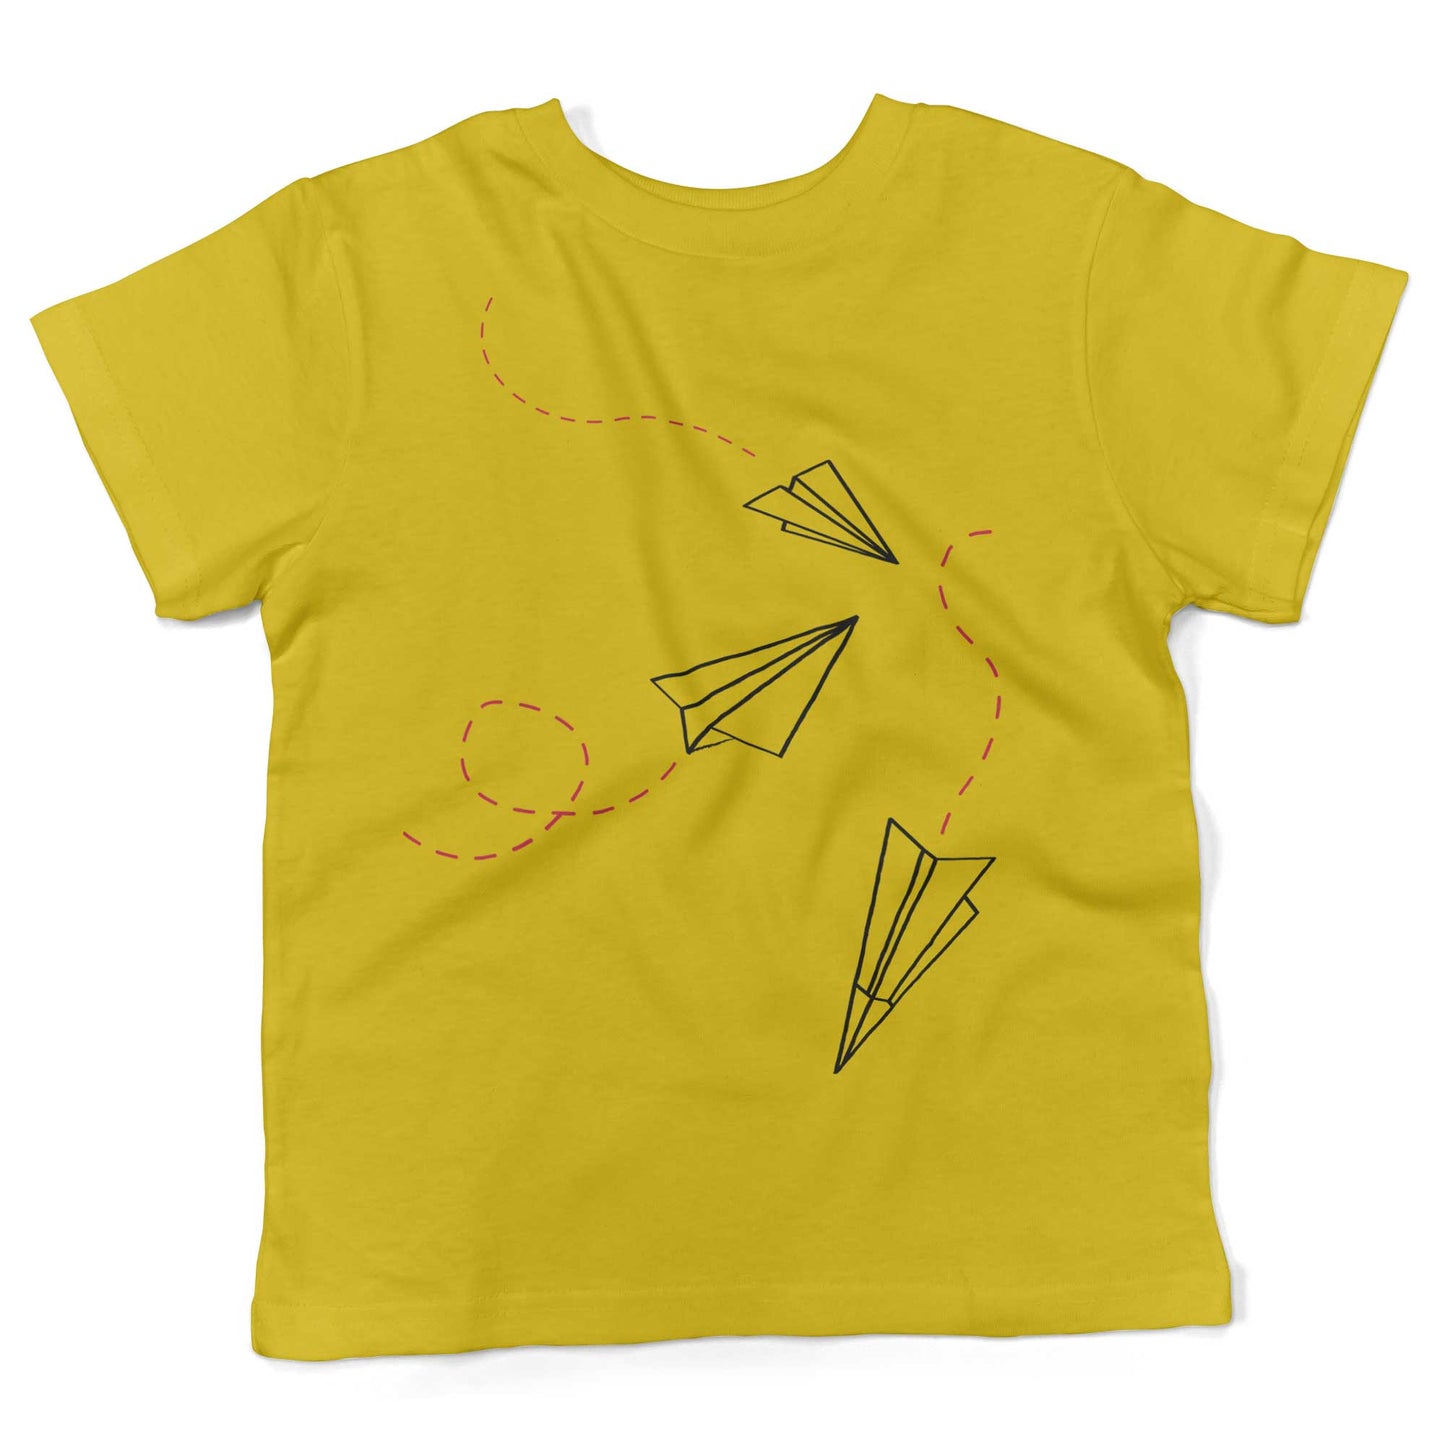 Paper Airplanes Toddler Shirt-Sunshine Yellow-2T